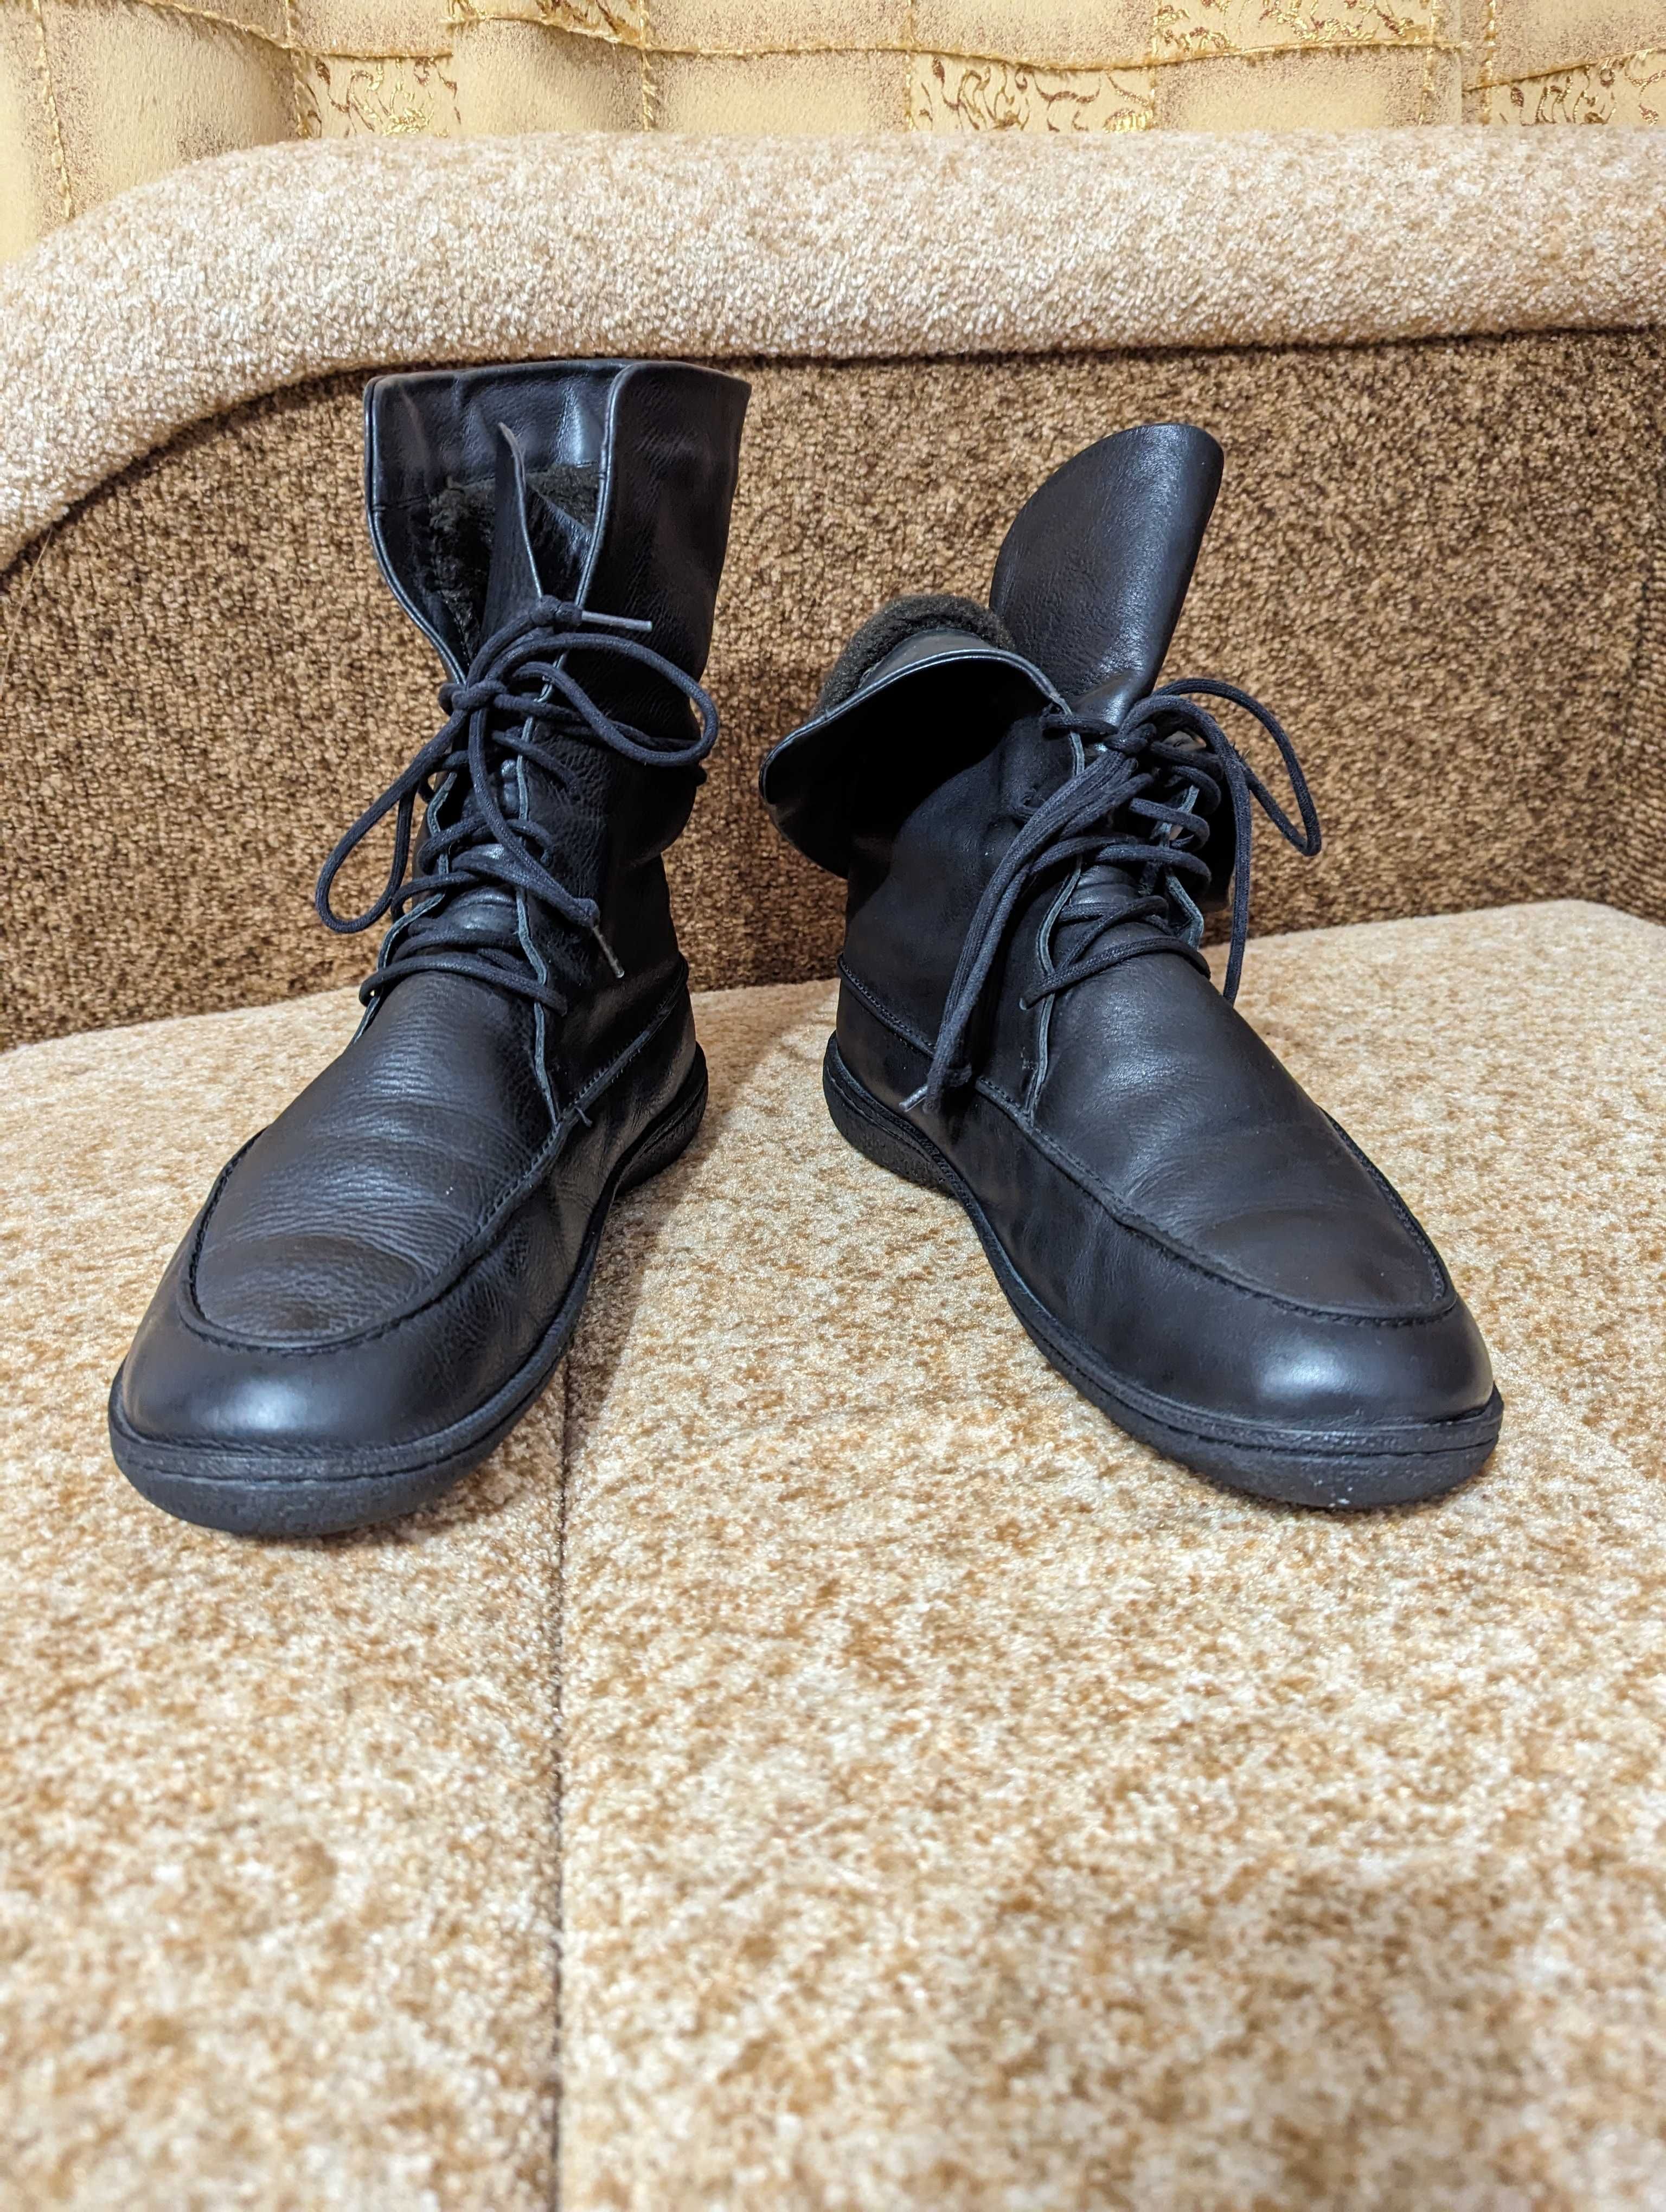 Мужские зимние теплые сапоги,ботинки Camper, размер 44